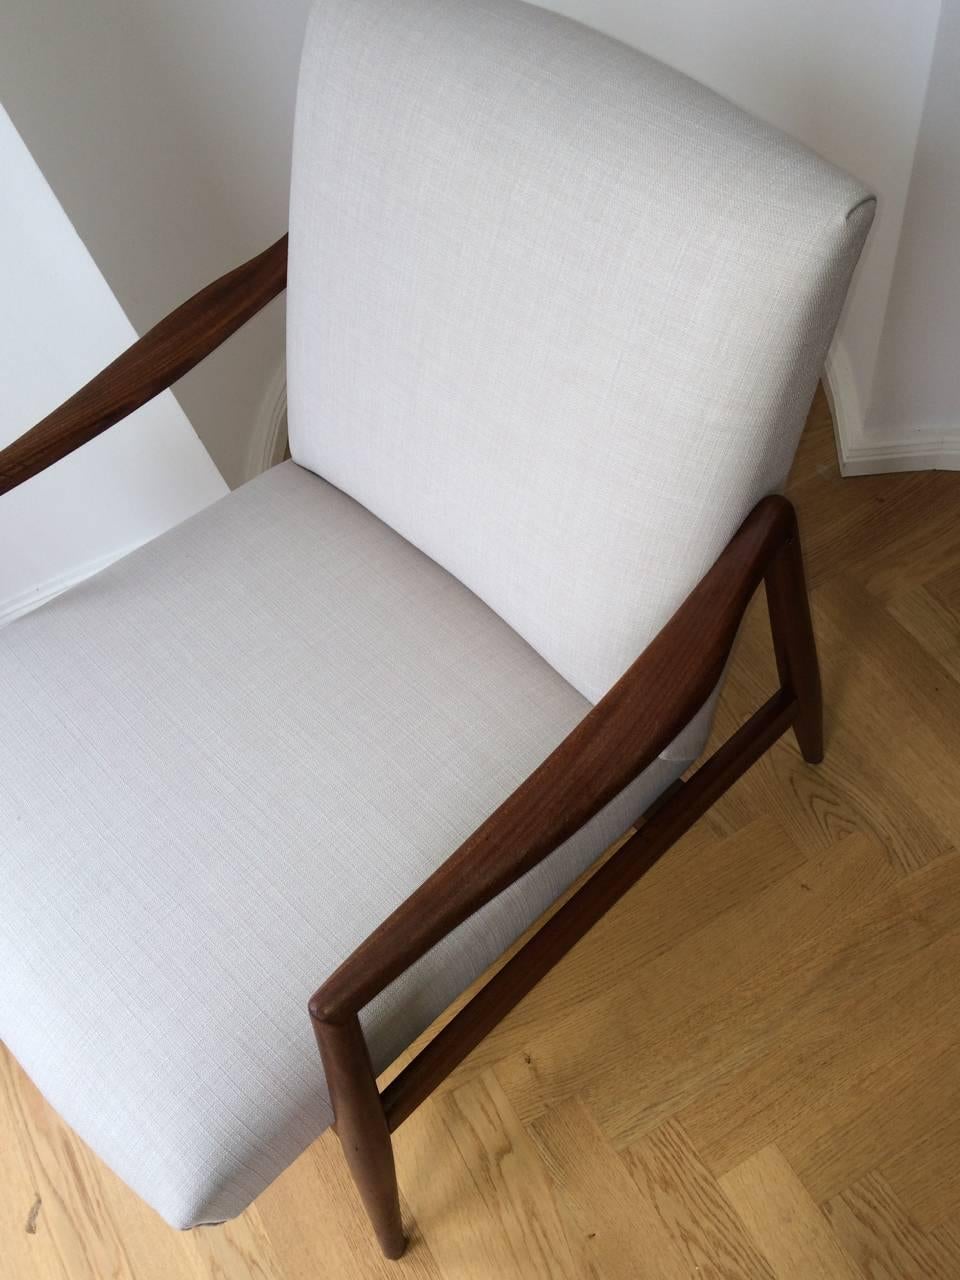 20th Century Mid-Century Teak Easy Chair by Hartmut Lohmeyer for Wilkhahn New Upholstery 1960 For Sale